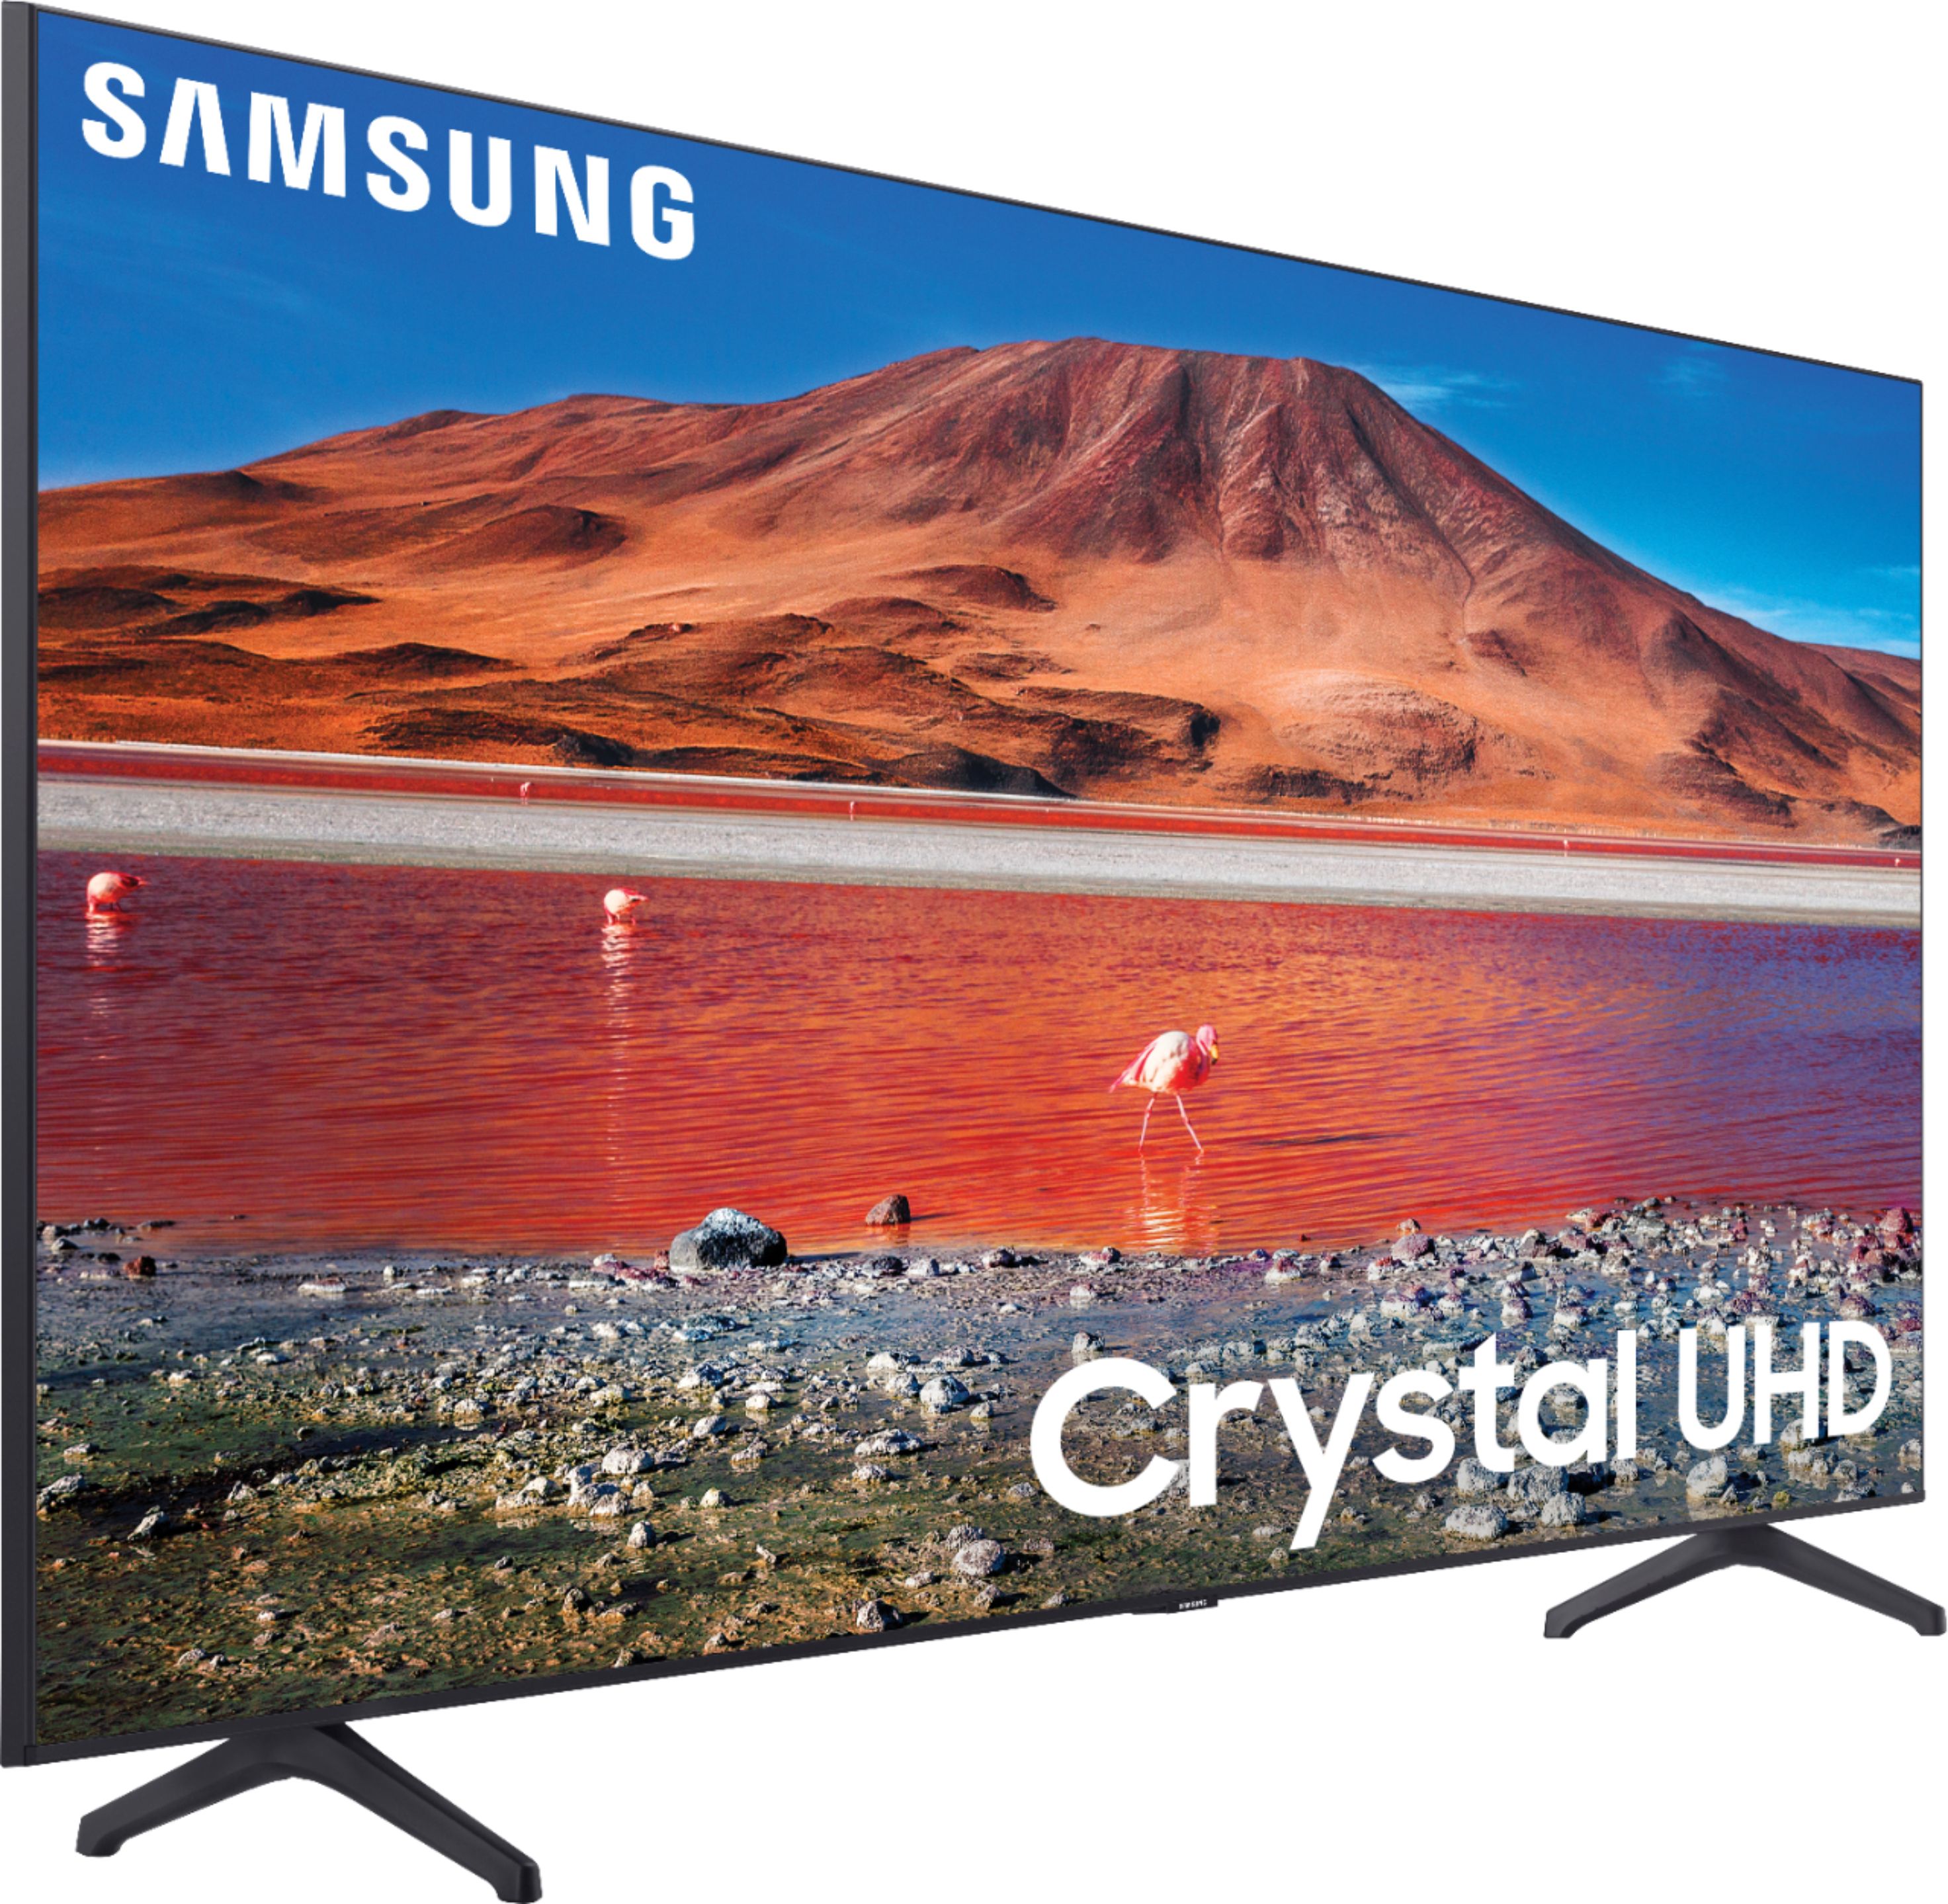 Samsung Samsung - 70” Class 7 Series LED 4K UHD Smart TV